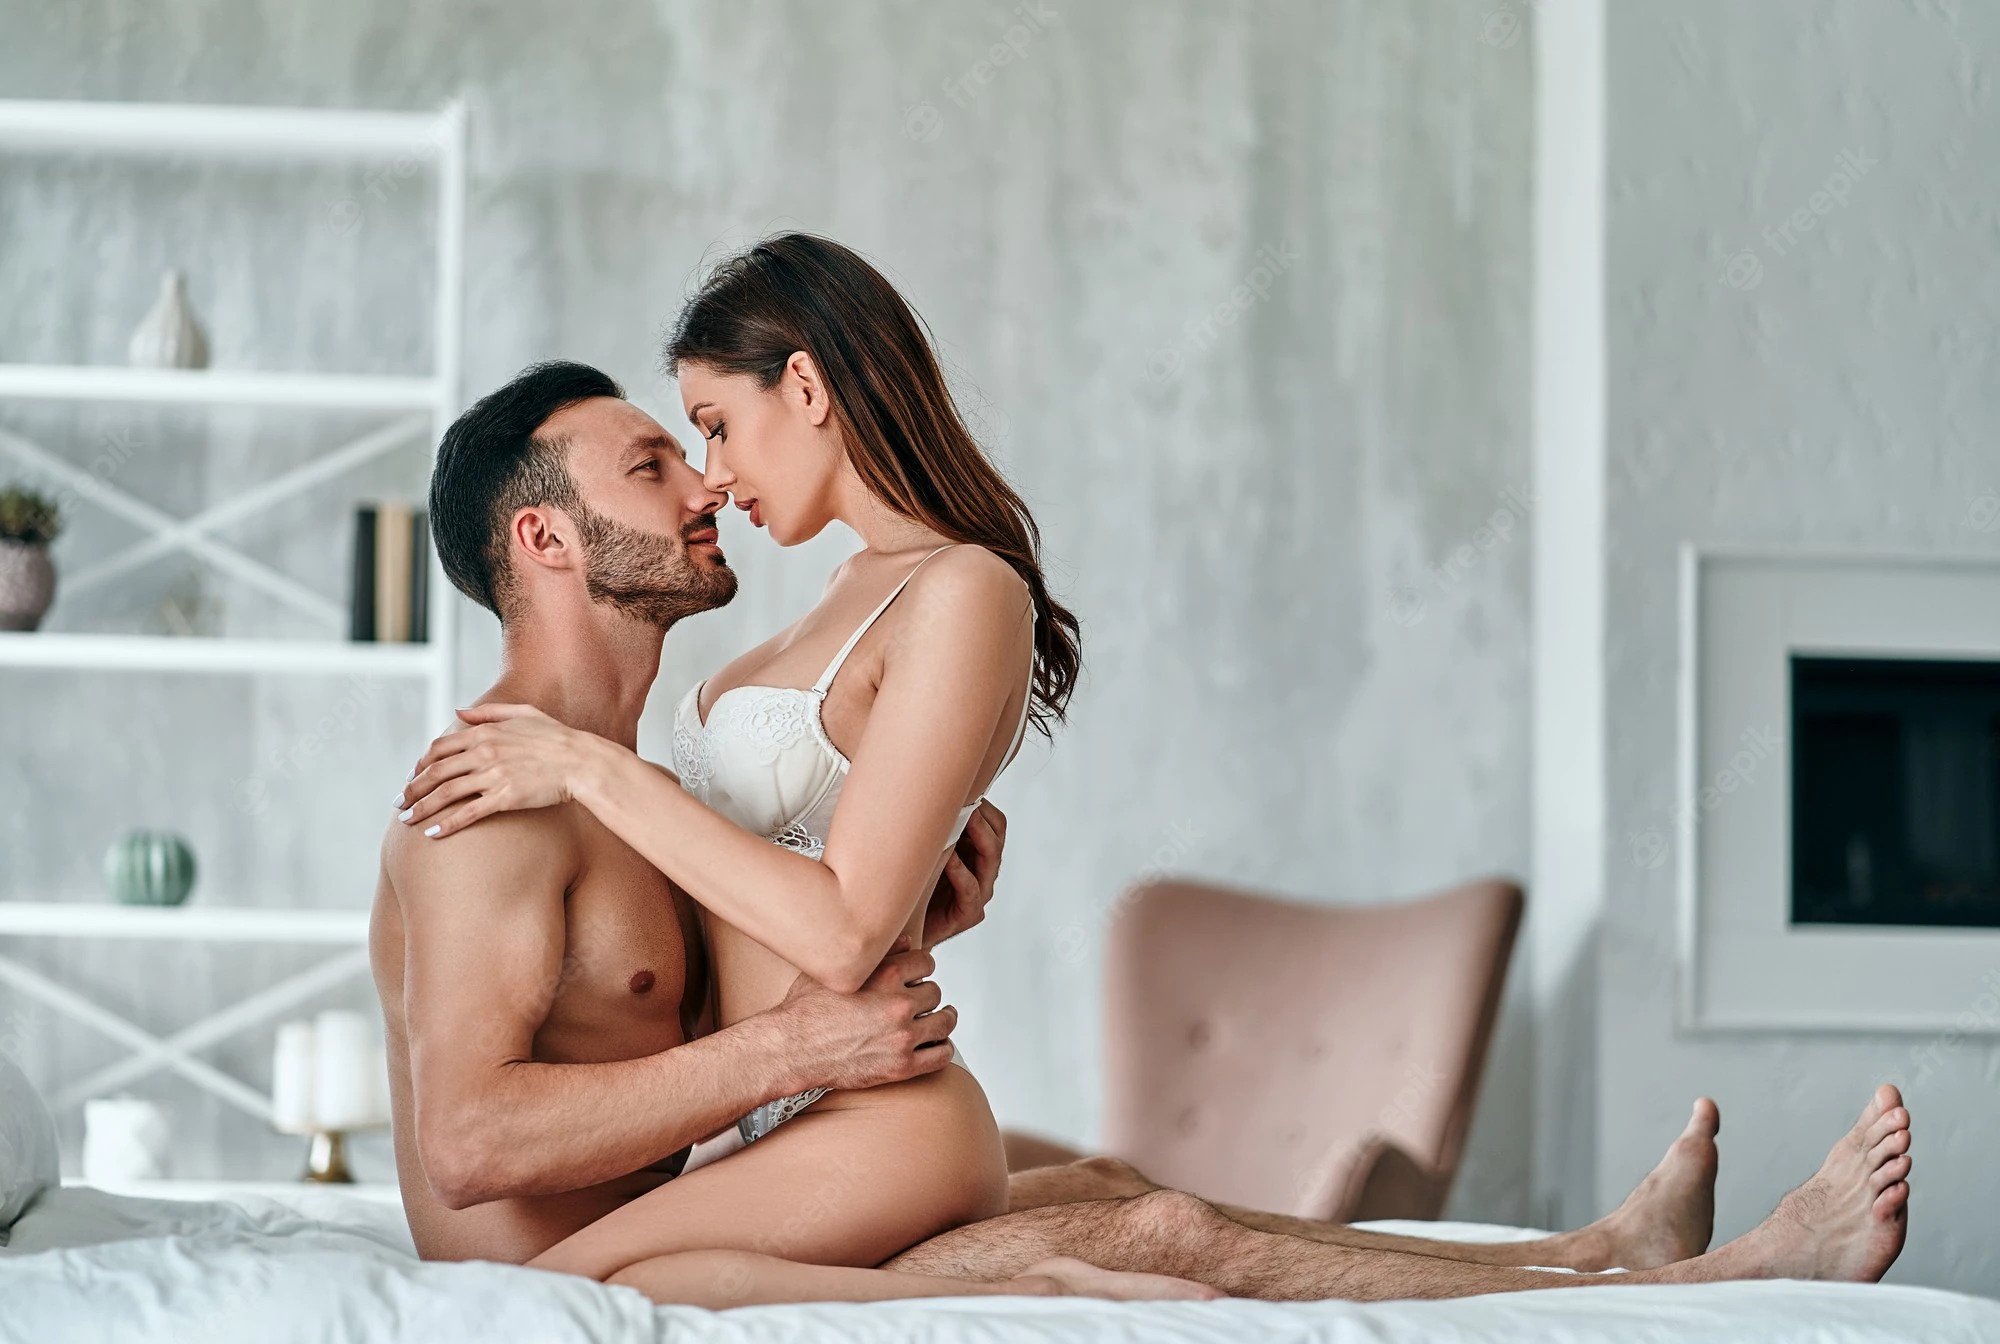 Top 2 Best Sites To Watch Romantic Porn Videos 2022